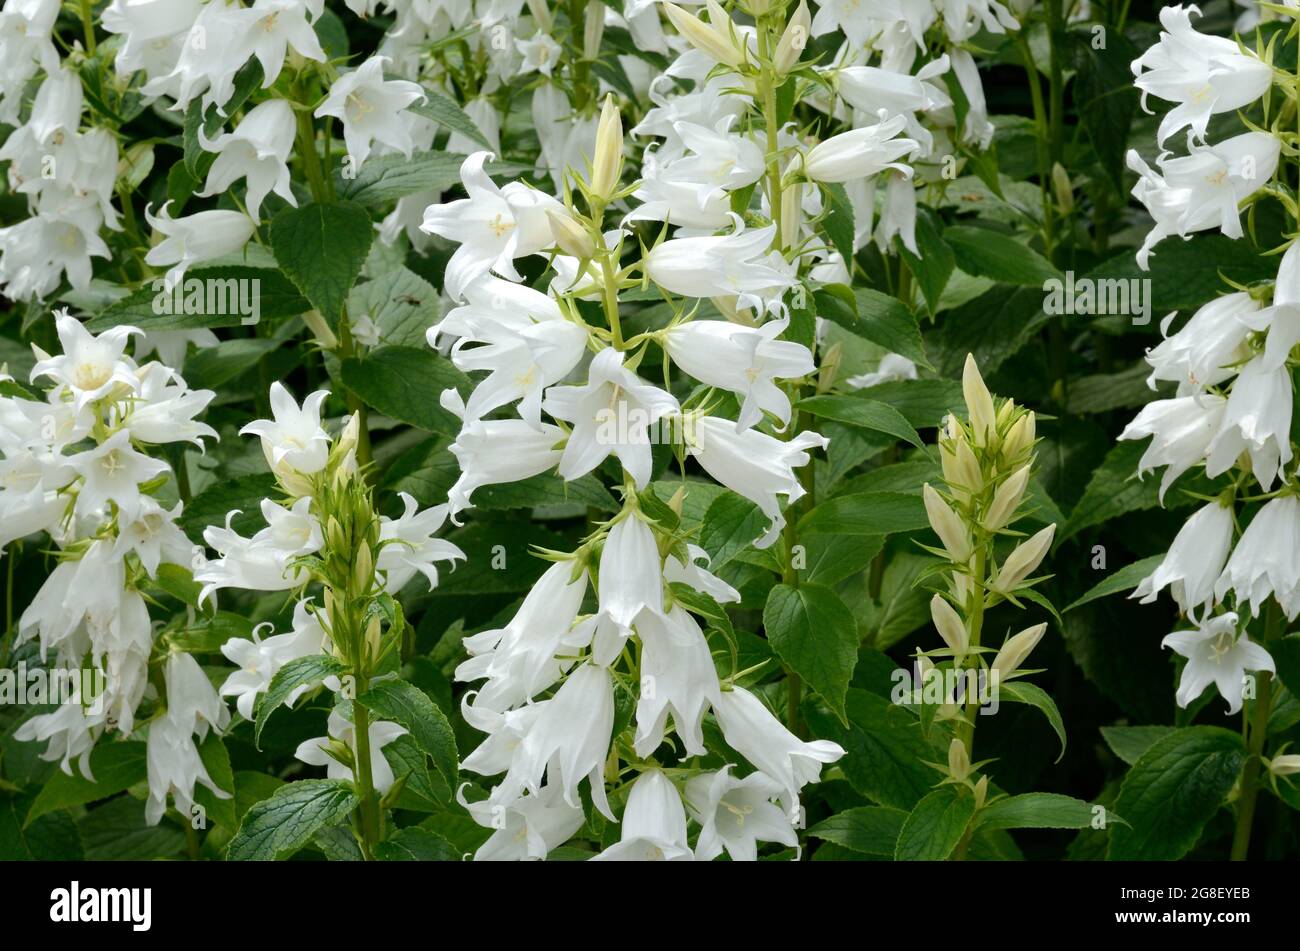 Campanula latifolia var macrantha Alba Broad leaved bellflower tall stiff stems carry pure white bell shaped flowers Stock Photo